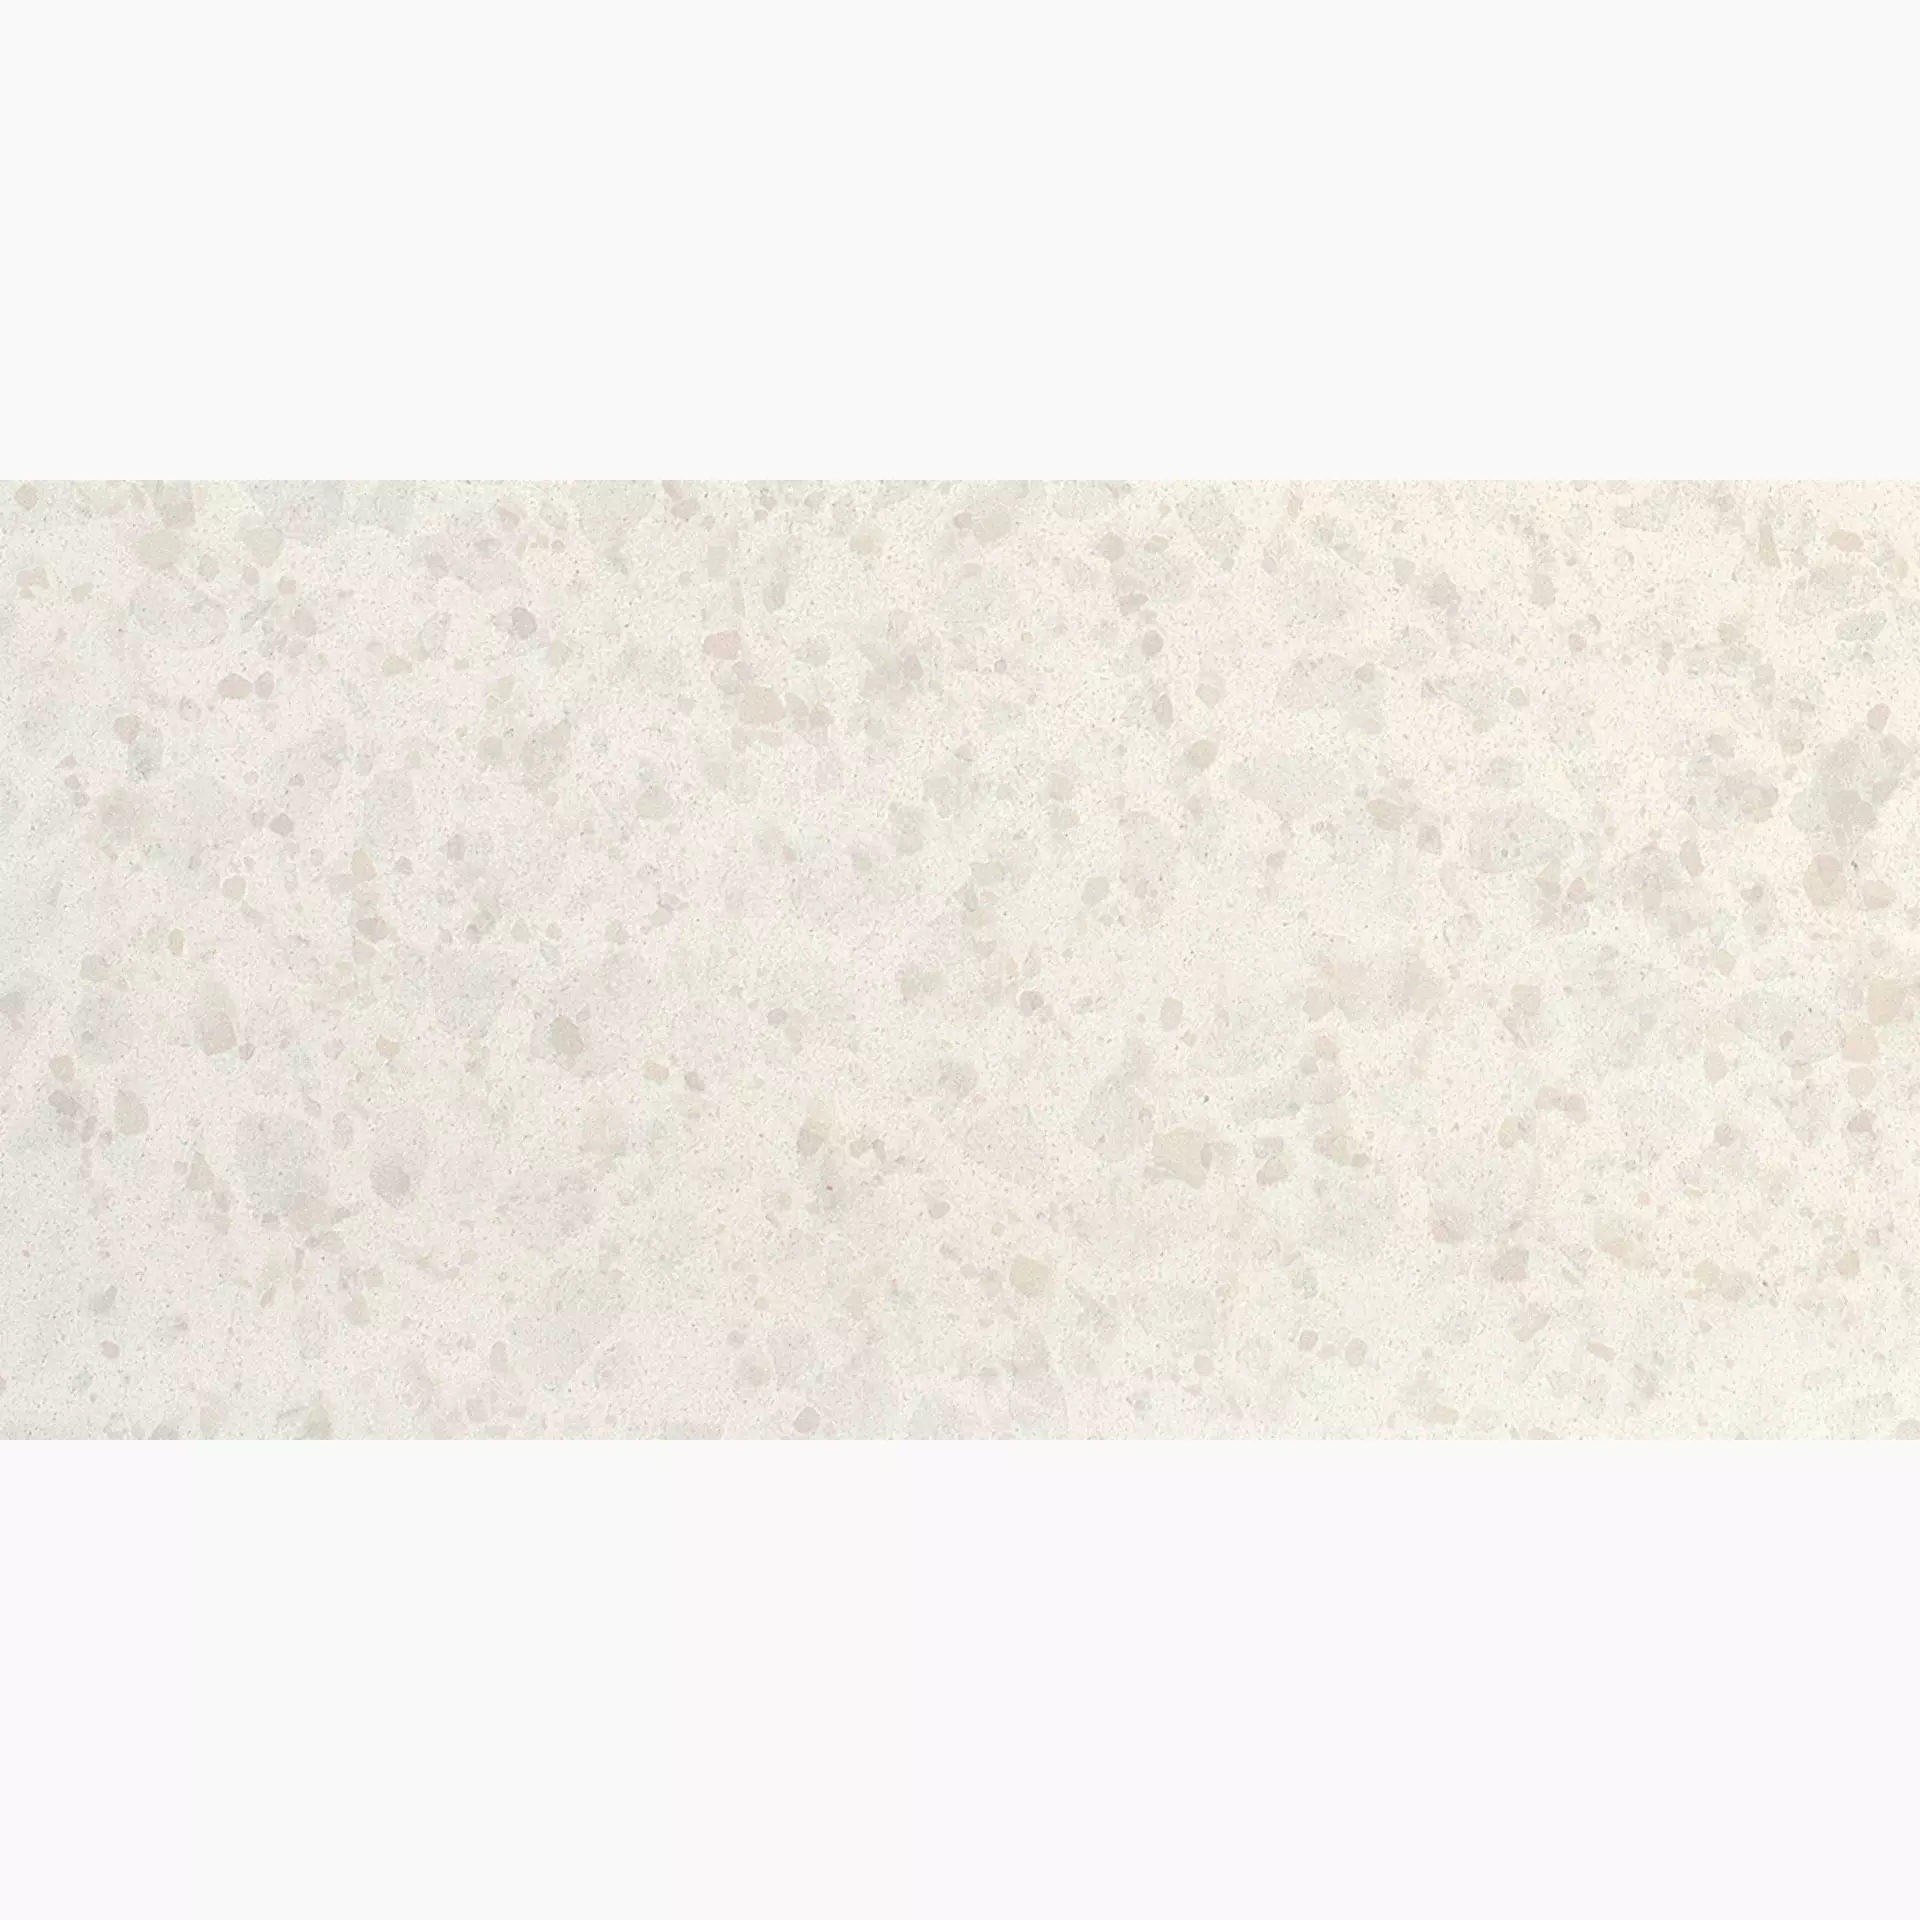 Gigacer Inclusioni Soave Bianco Perla Soft Bianco Perla 12INCL3060BIAPERSOFT soft 30x60cm 12mm